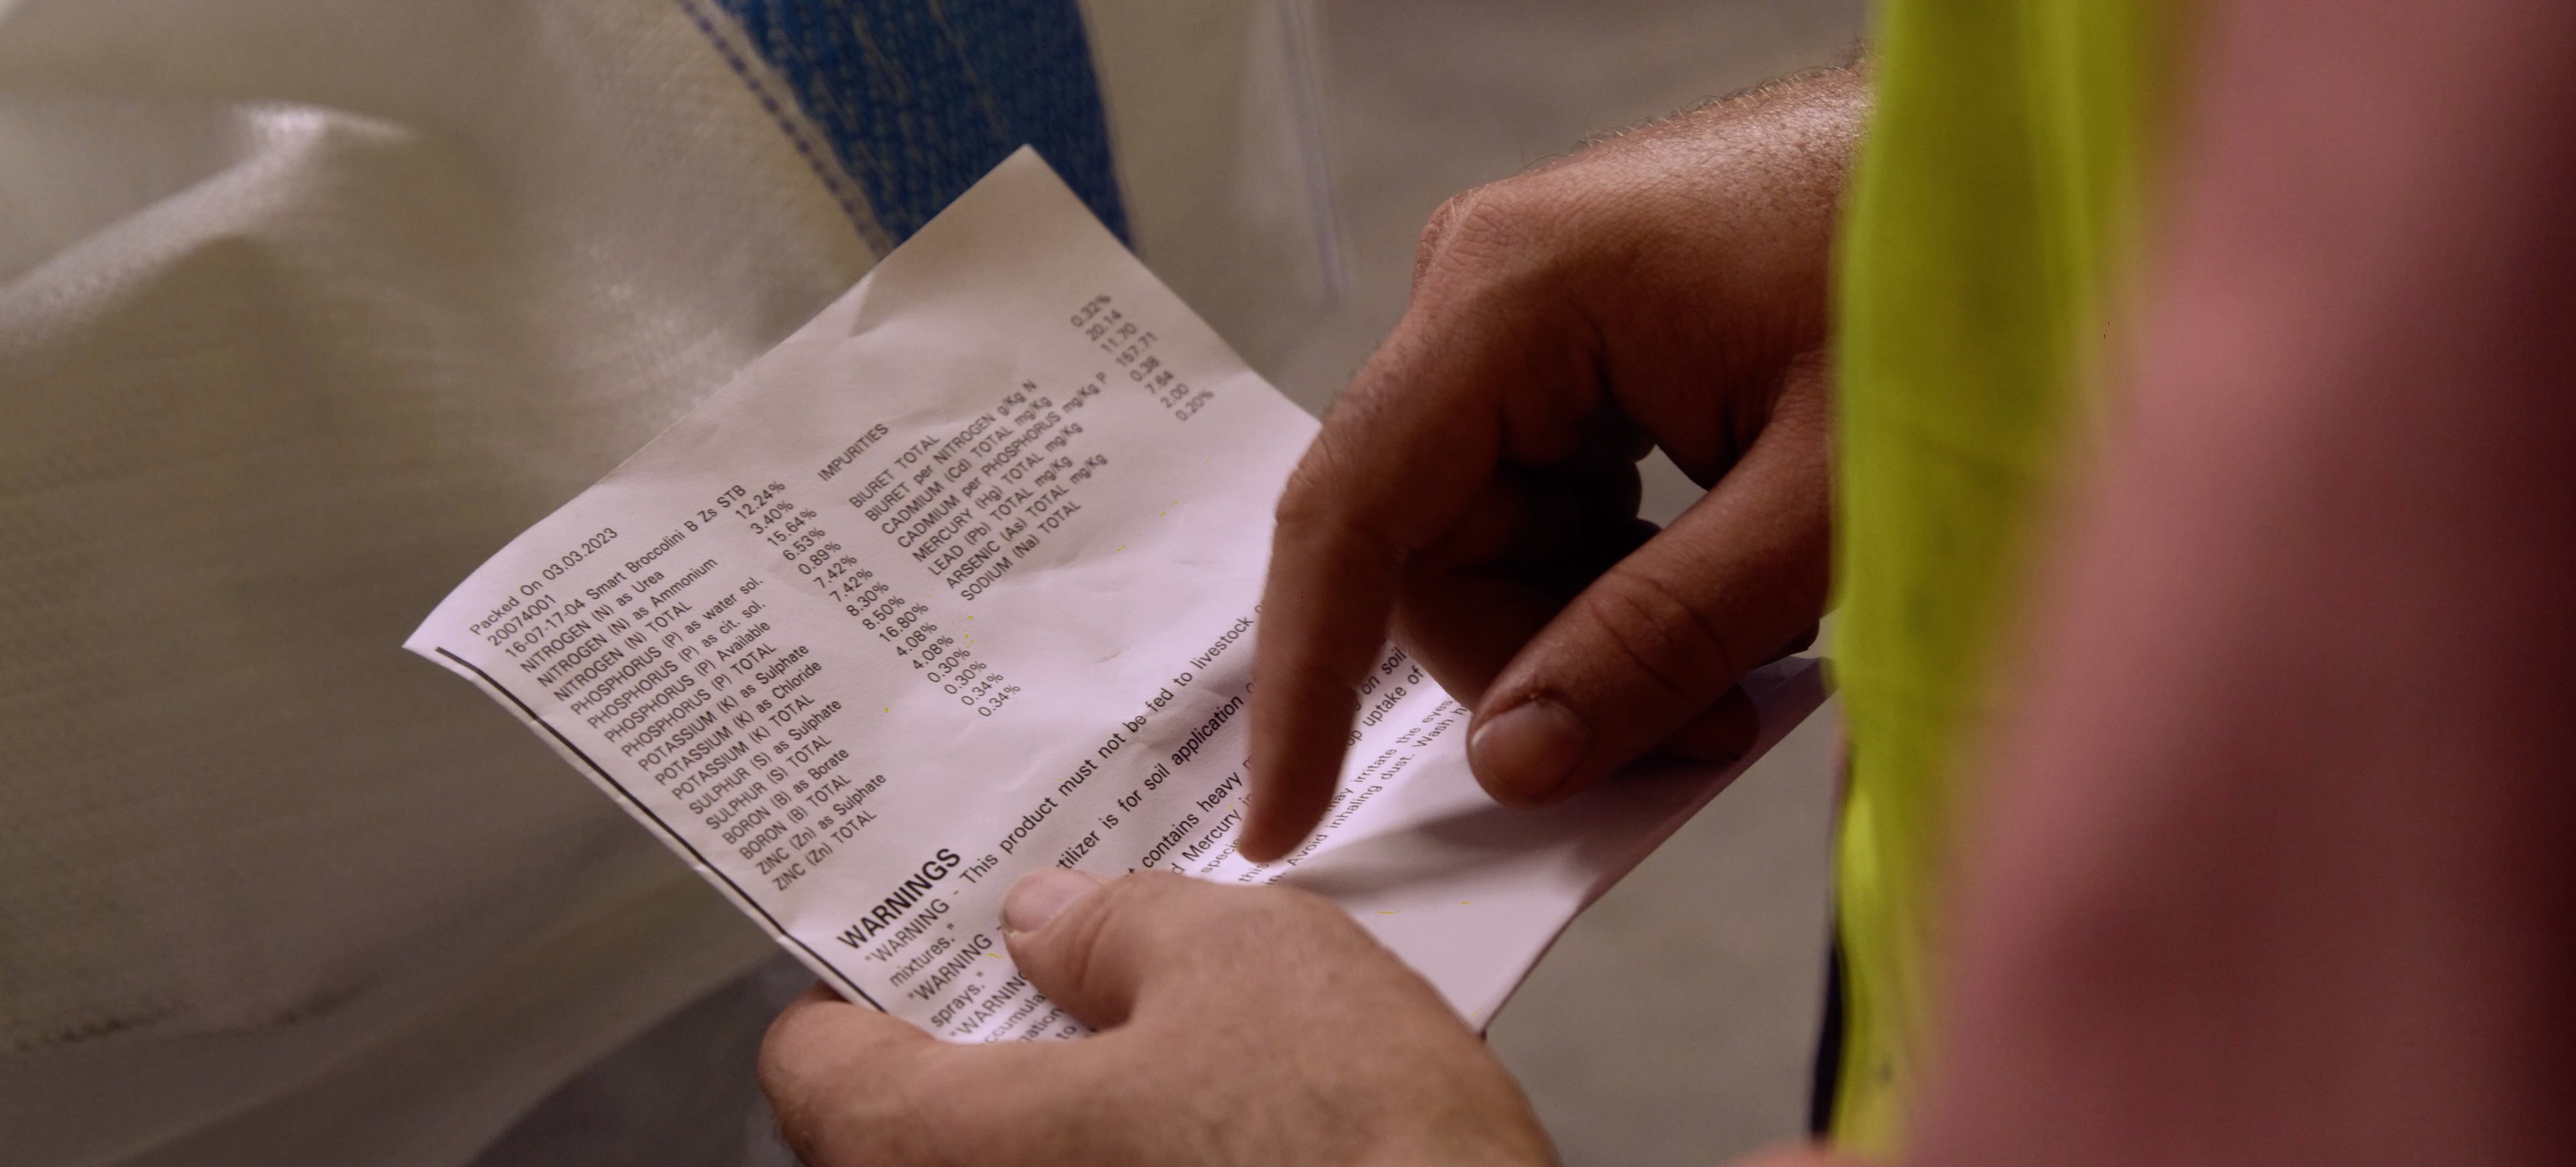 Close up photo of a person reading fertiliser label.